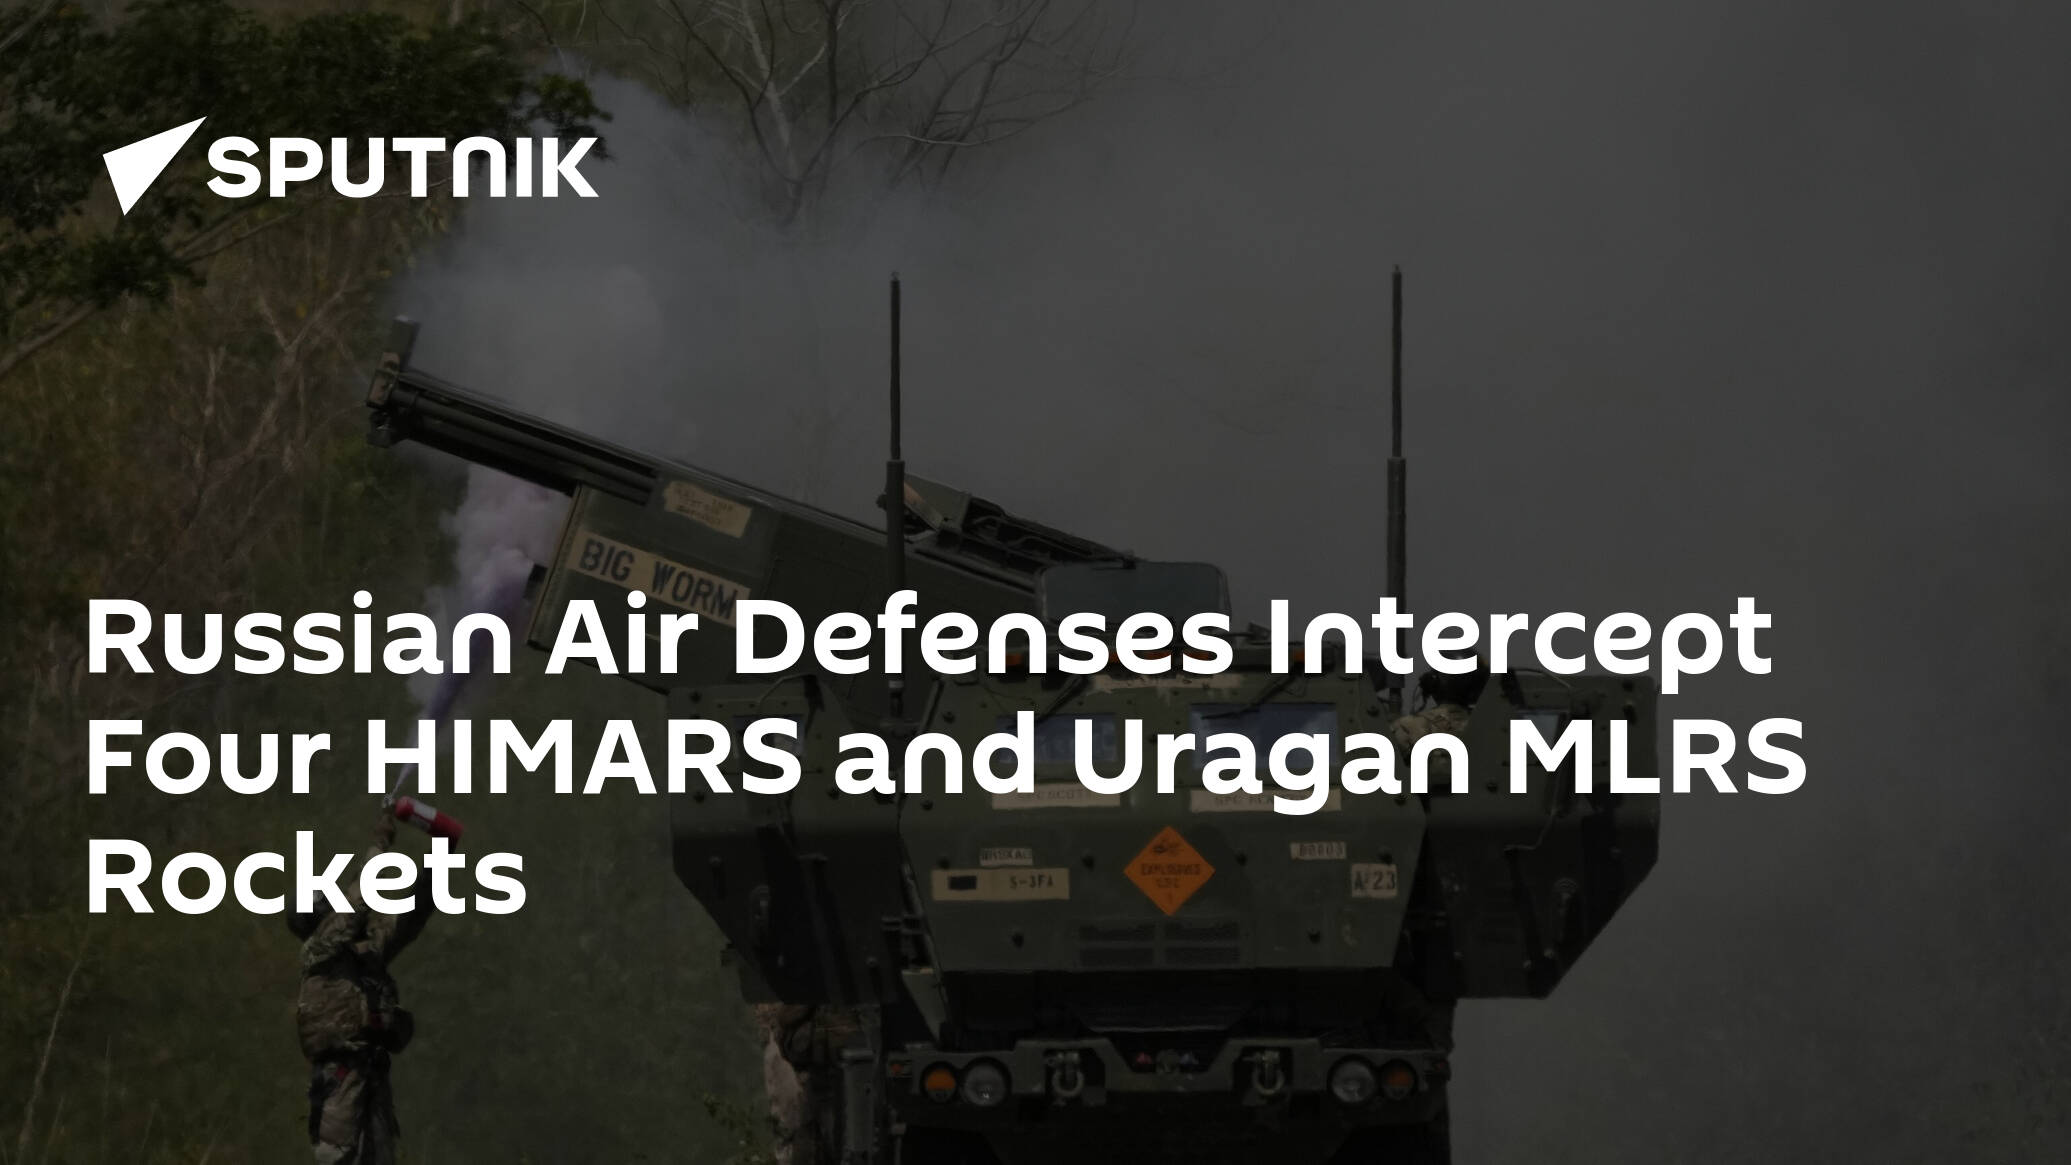 Russian Air Defenses Intercept Four HIMARS and Uragan MLRS Rockets